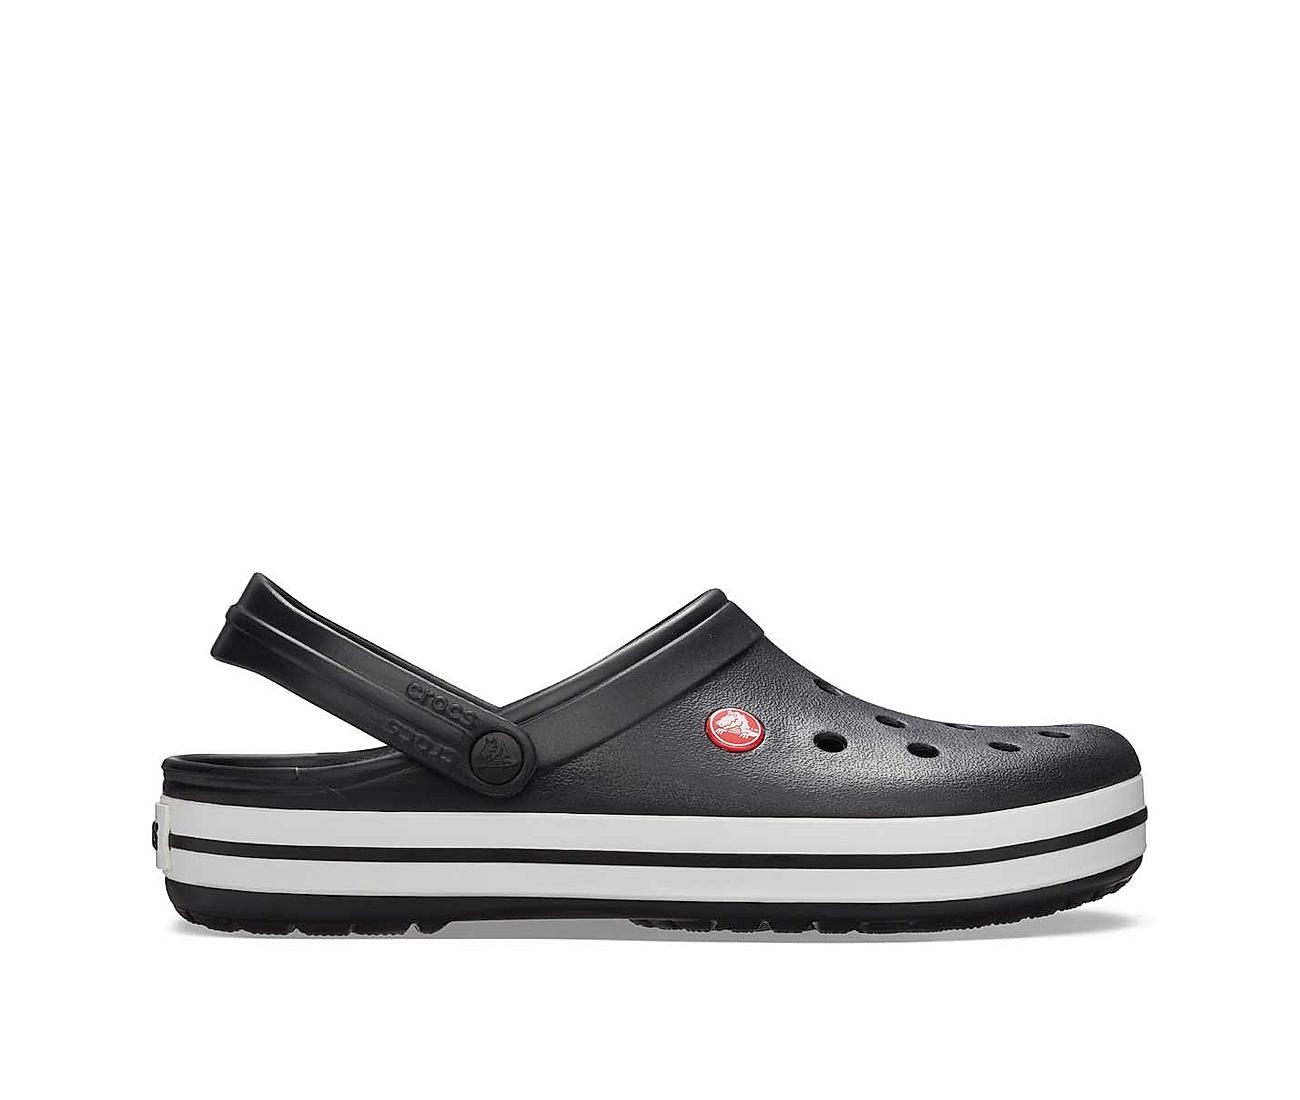 Buy Crocs Men's Black Crocband Online at Regal Shoes |8276159